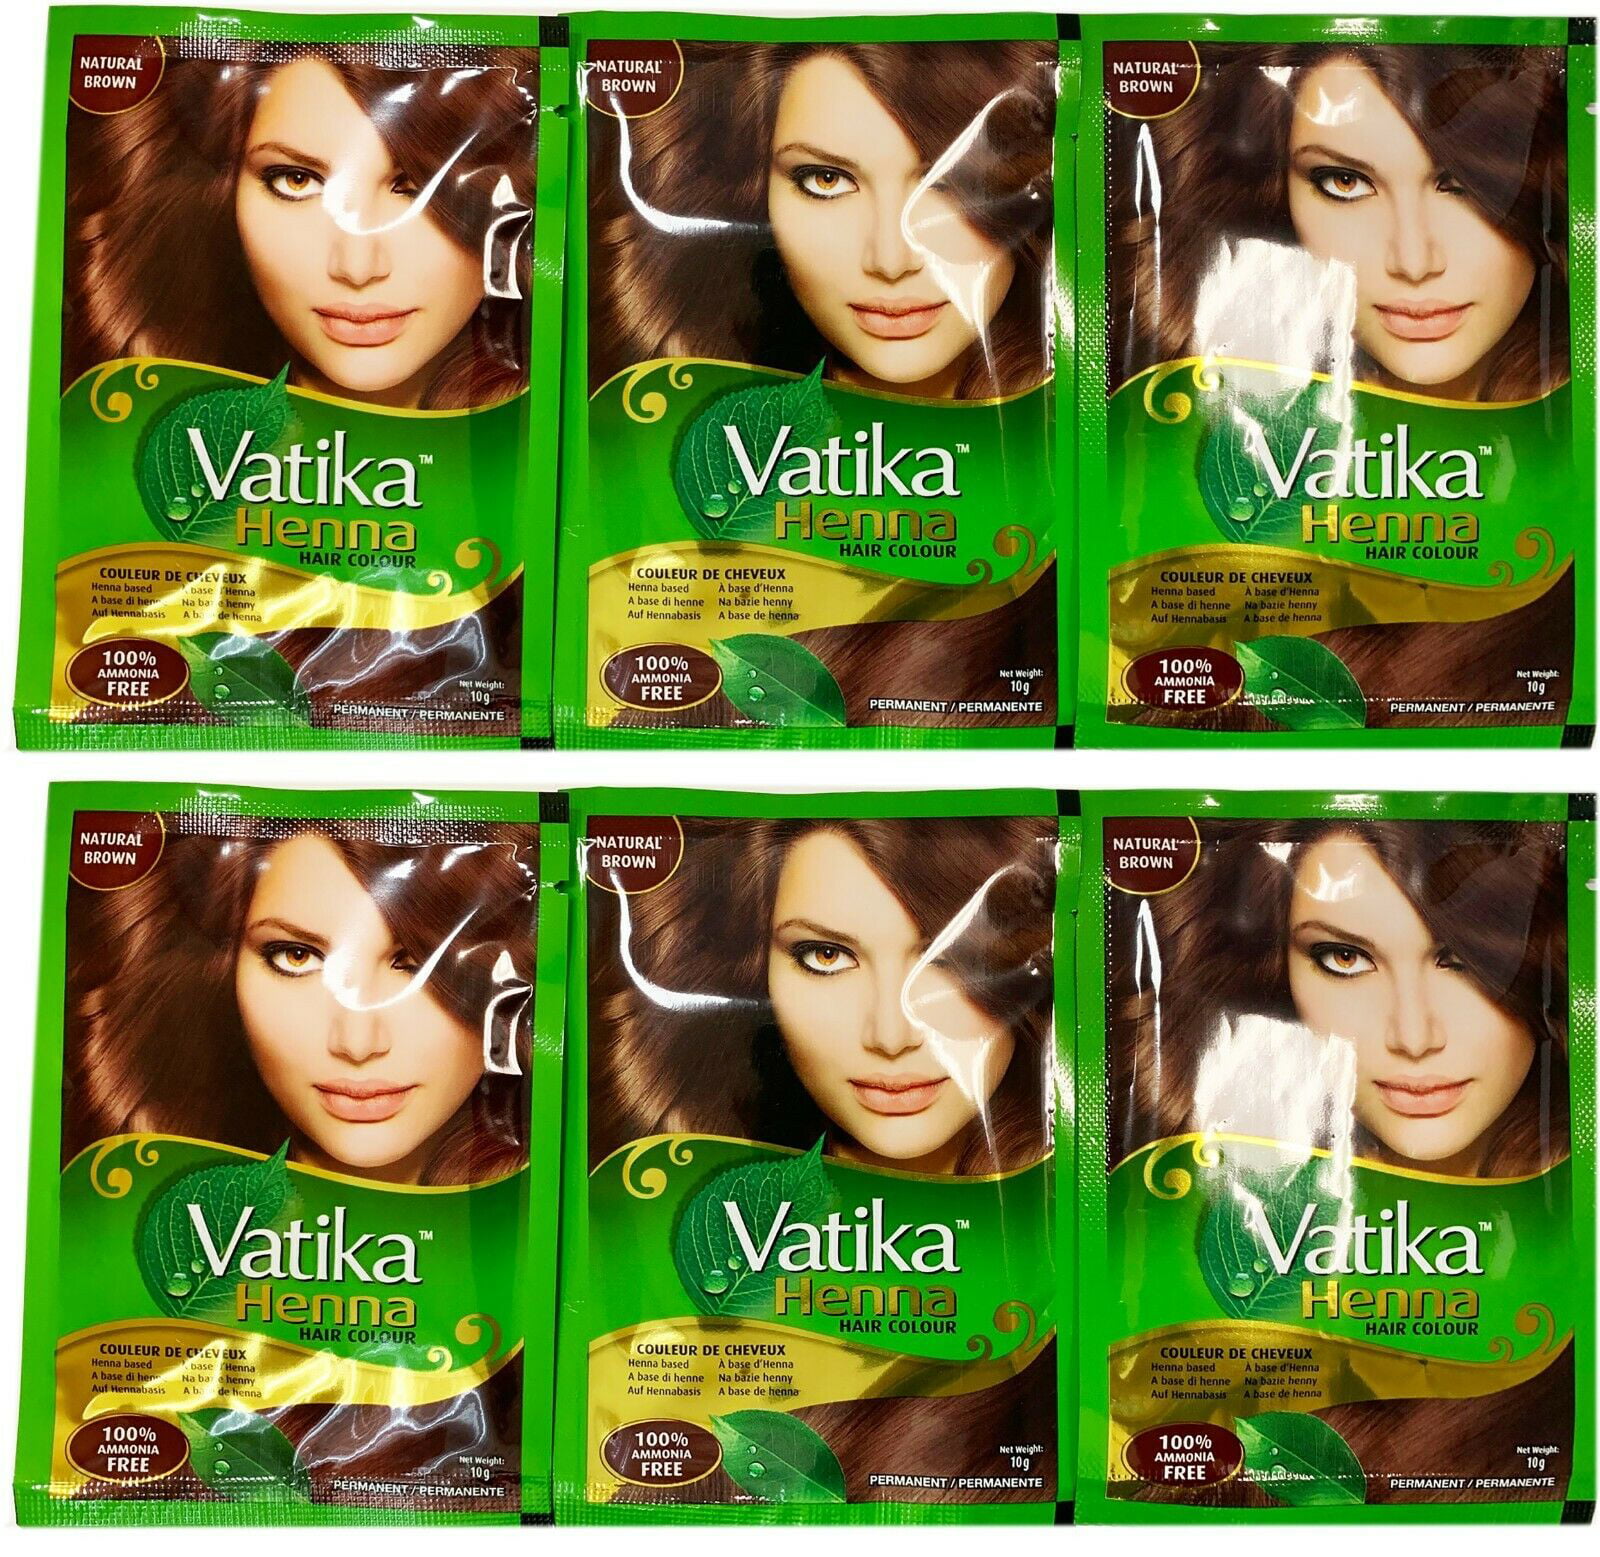 Quantity 6 Sachets 10g each NATURAL BROWN Vatika Henna Hair Color Dye Powder  